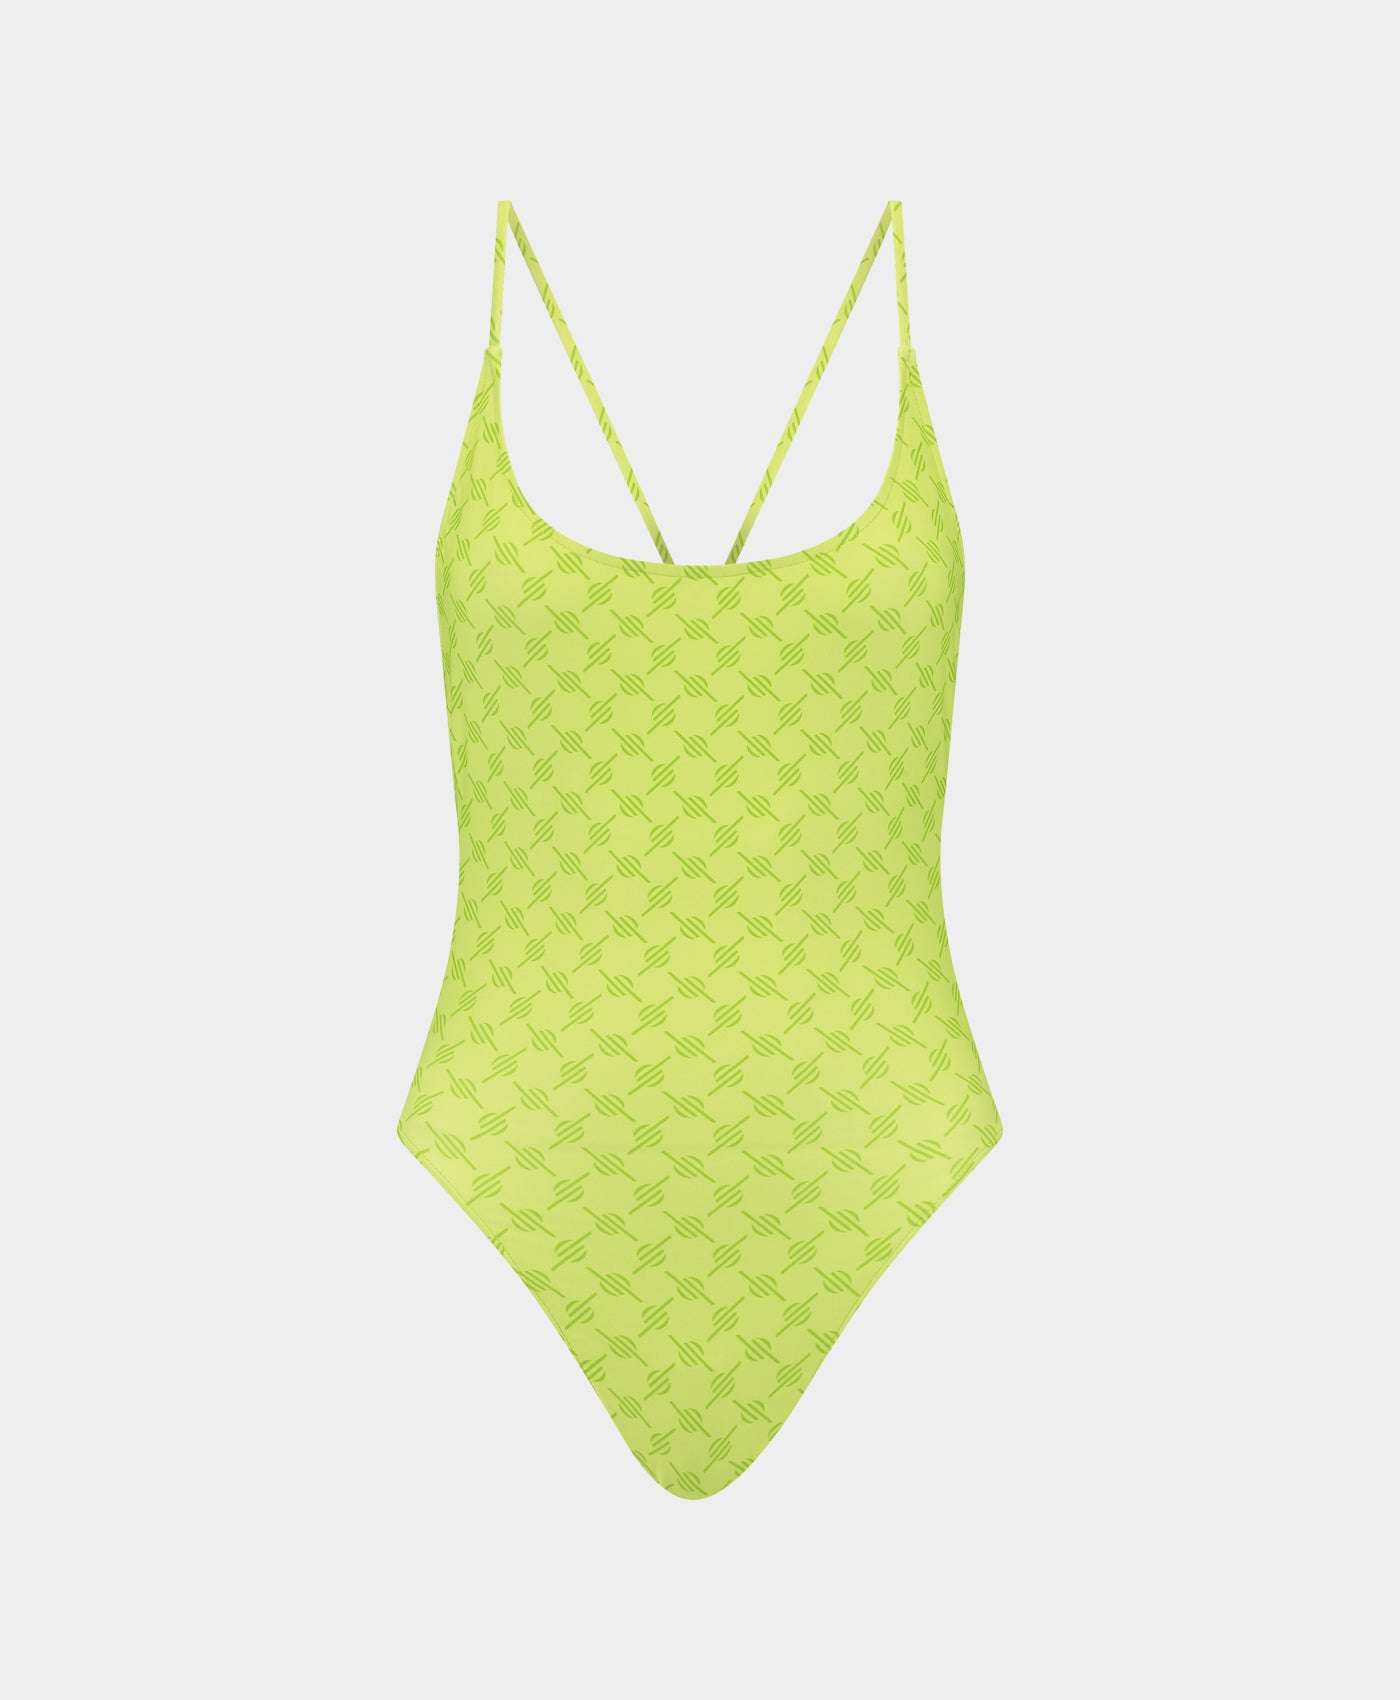 DP - Daiquiri Green Reya Monogram Swimsuit - Packshot - Front